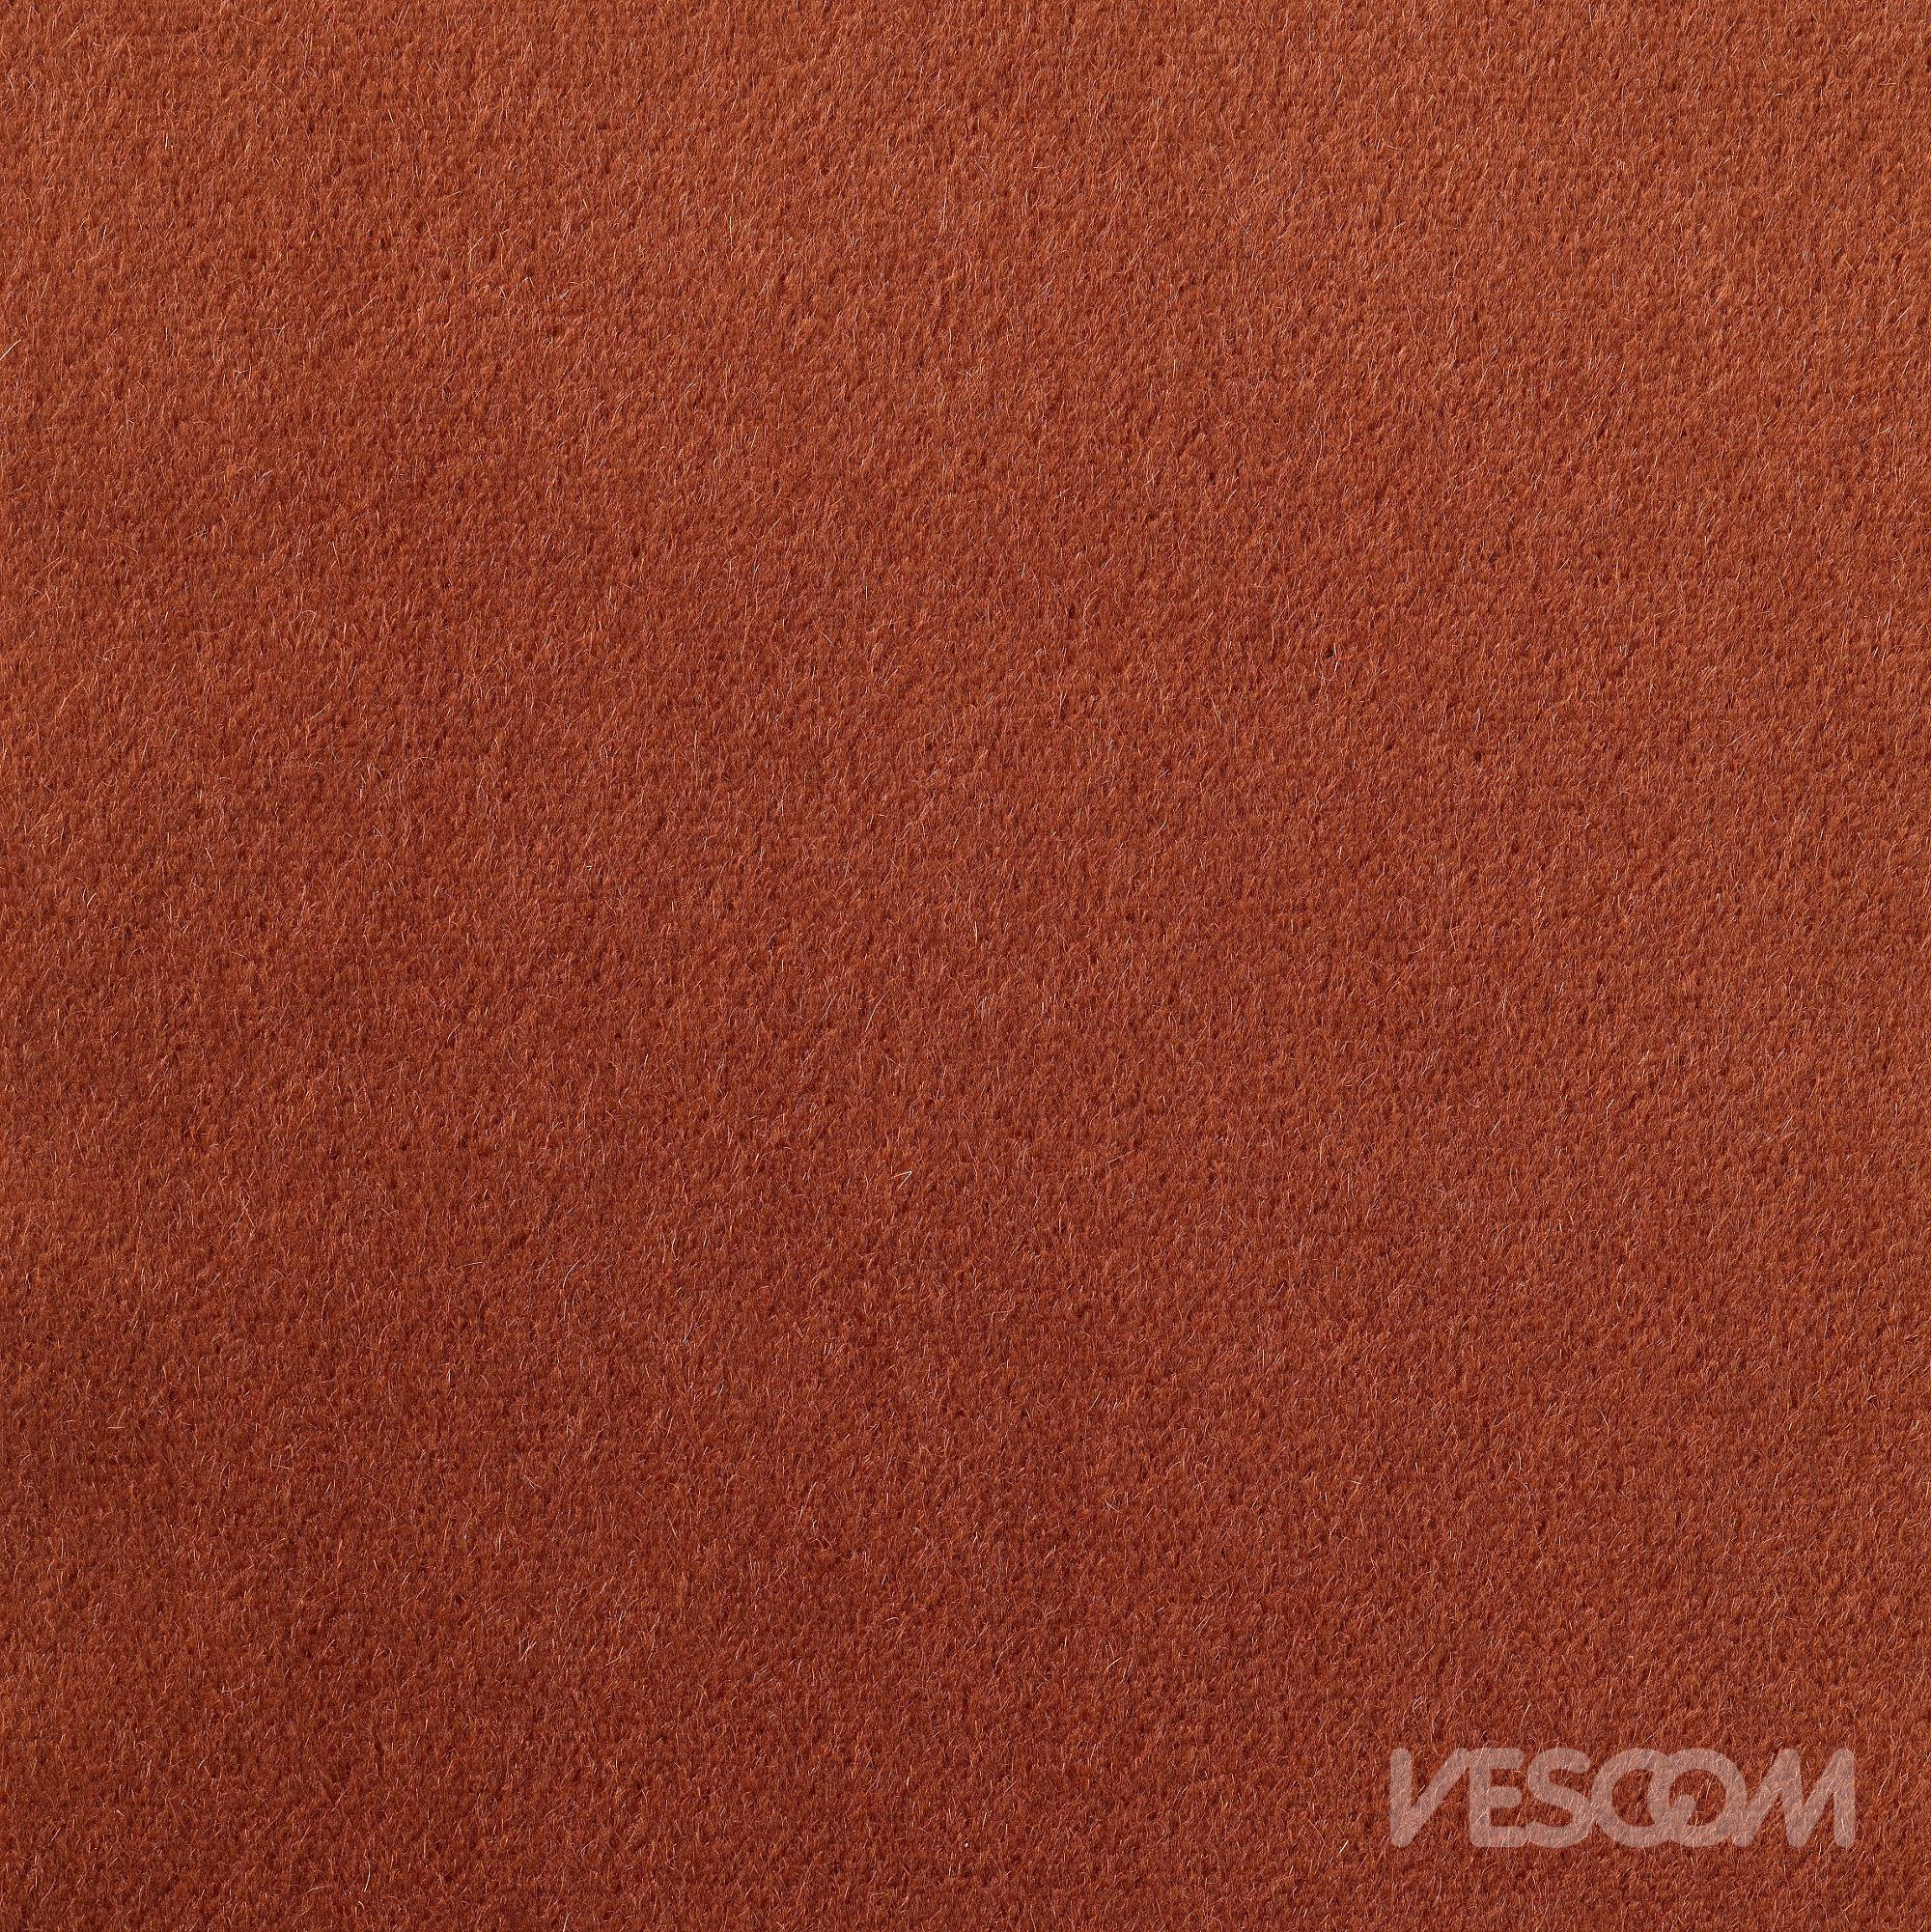 Vescom Ariana Upholstery Fabric 7061.28 